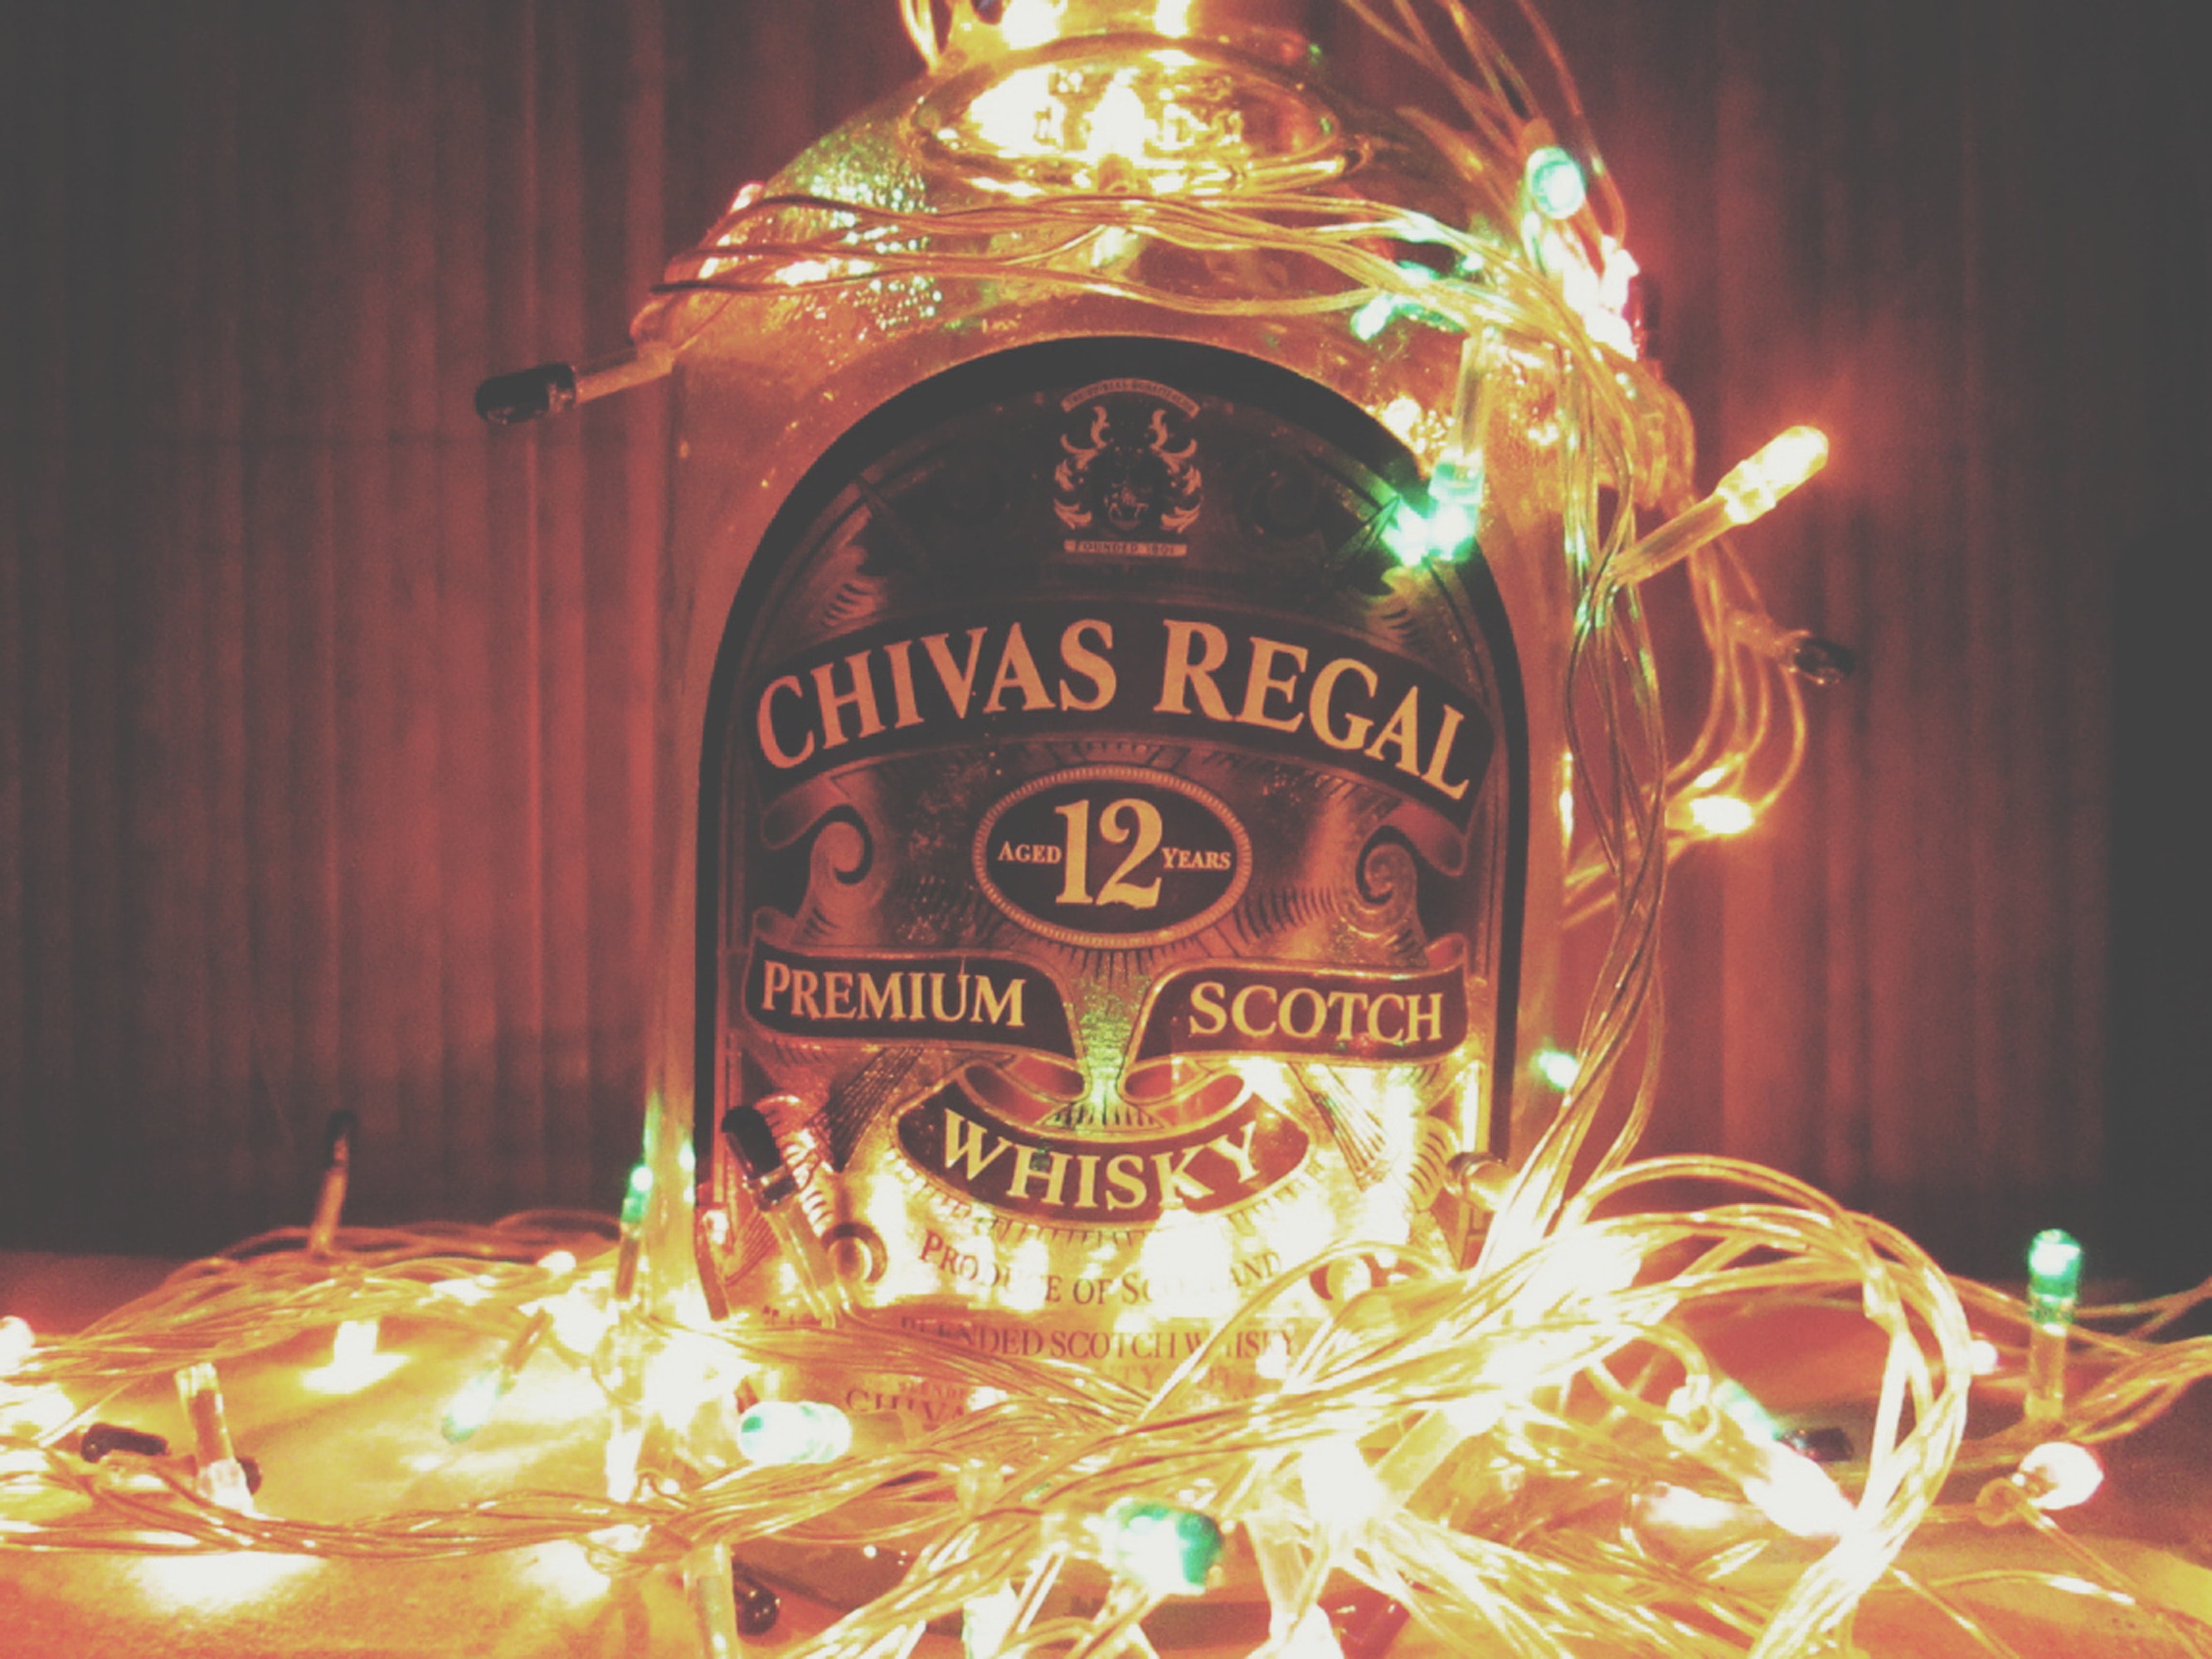 chivas-regal-premium-scotch-whisky-194925